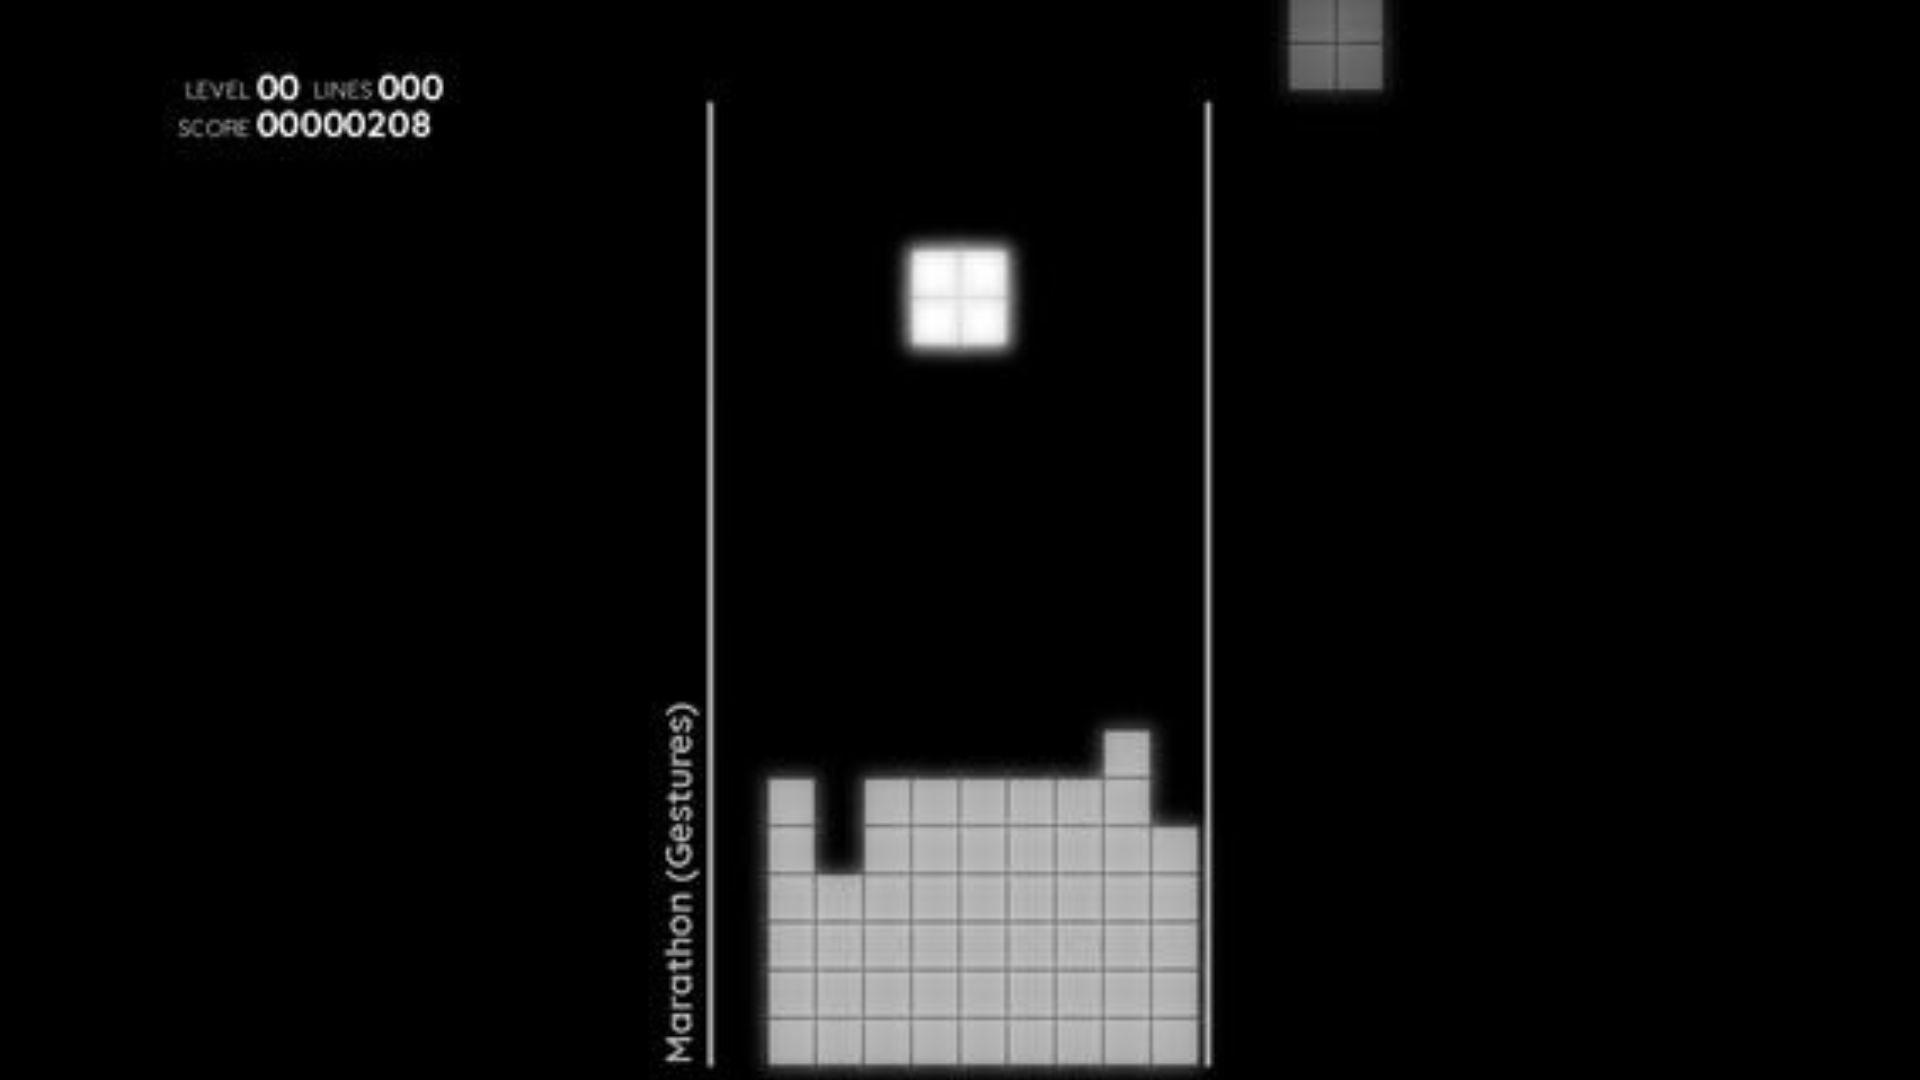 One of the many Tetris games, Falling Lightblocks, a black and grey minimalist version of Tetris.